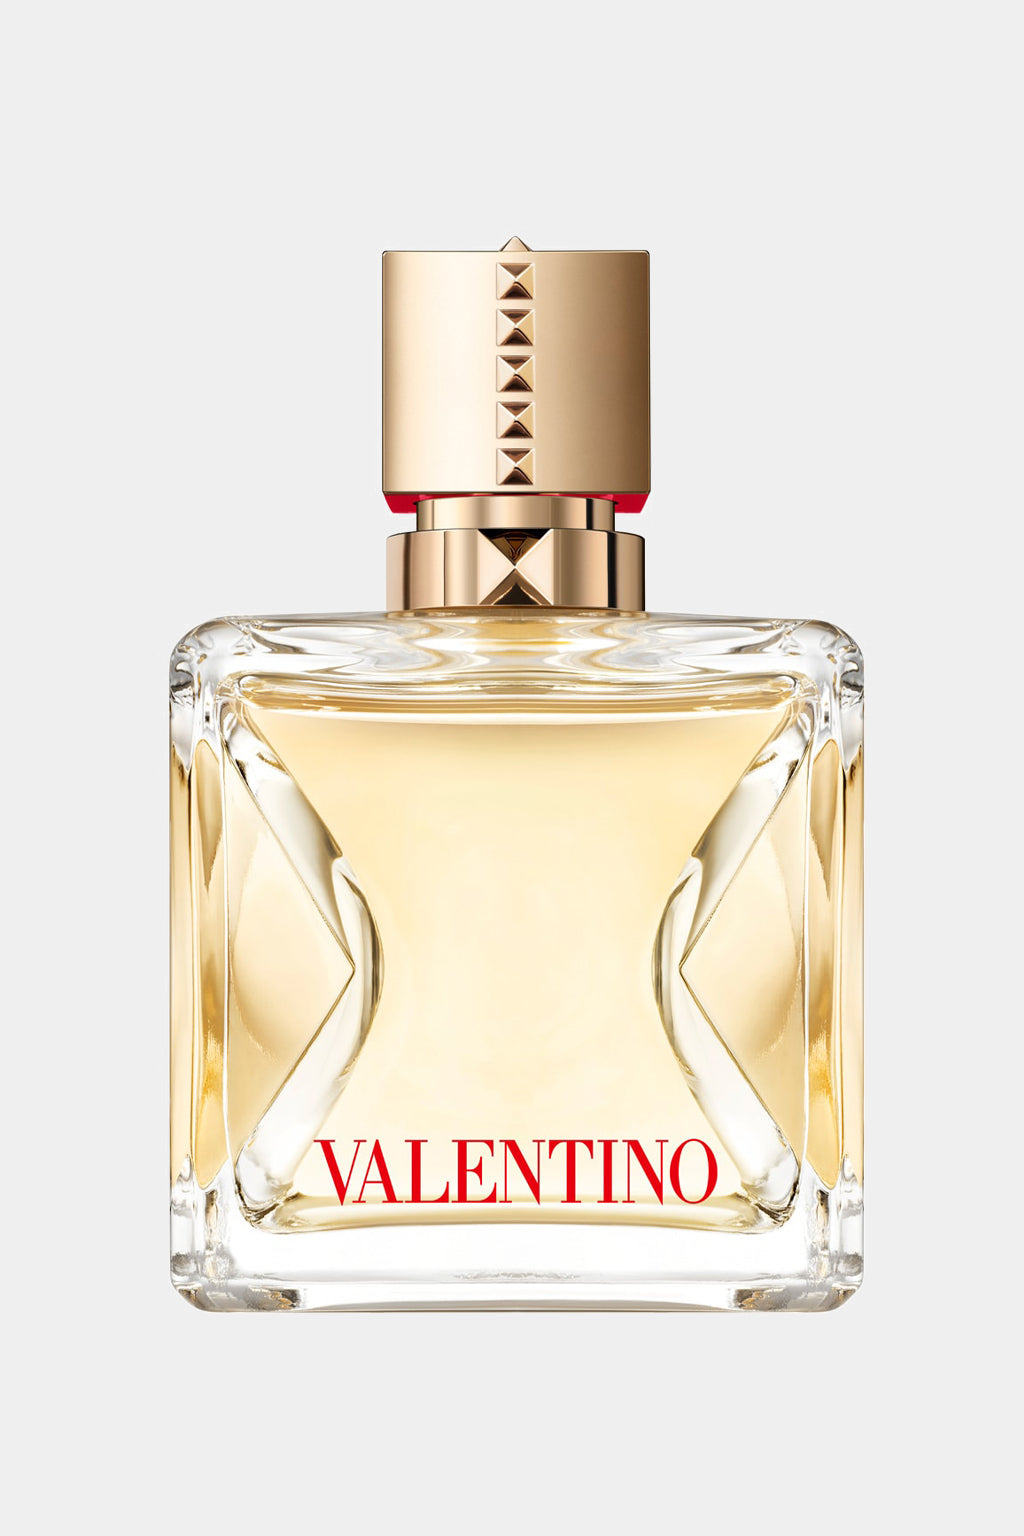 Valentino - Voce Viva Eau de Parfum